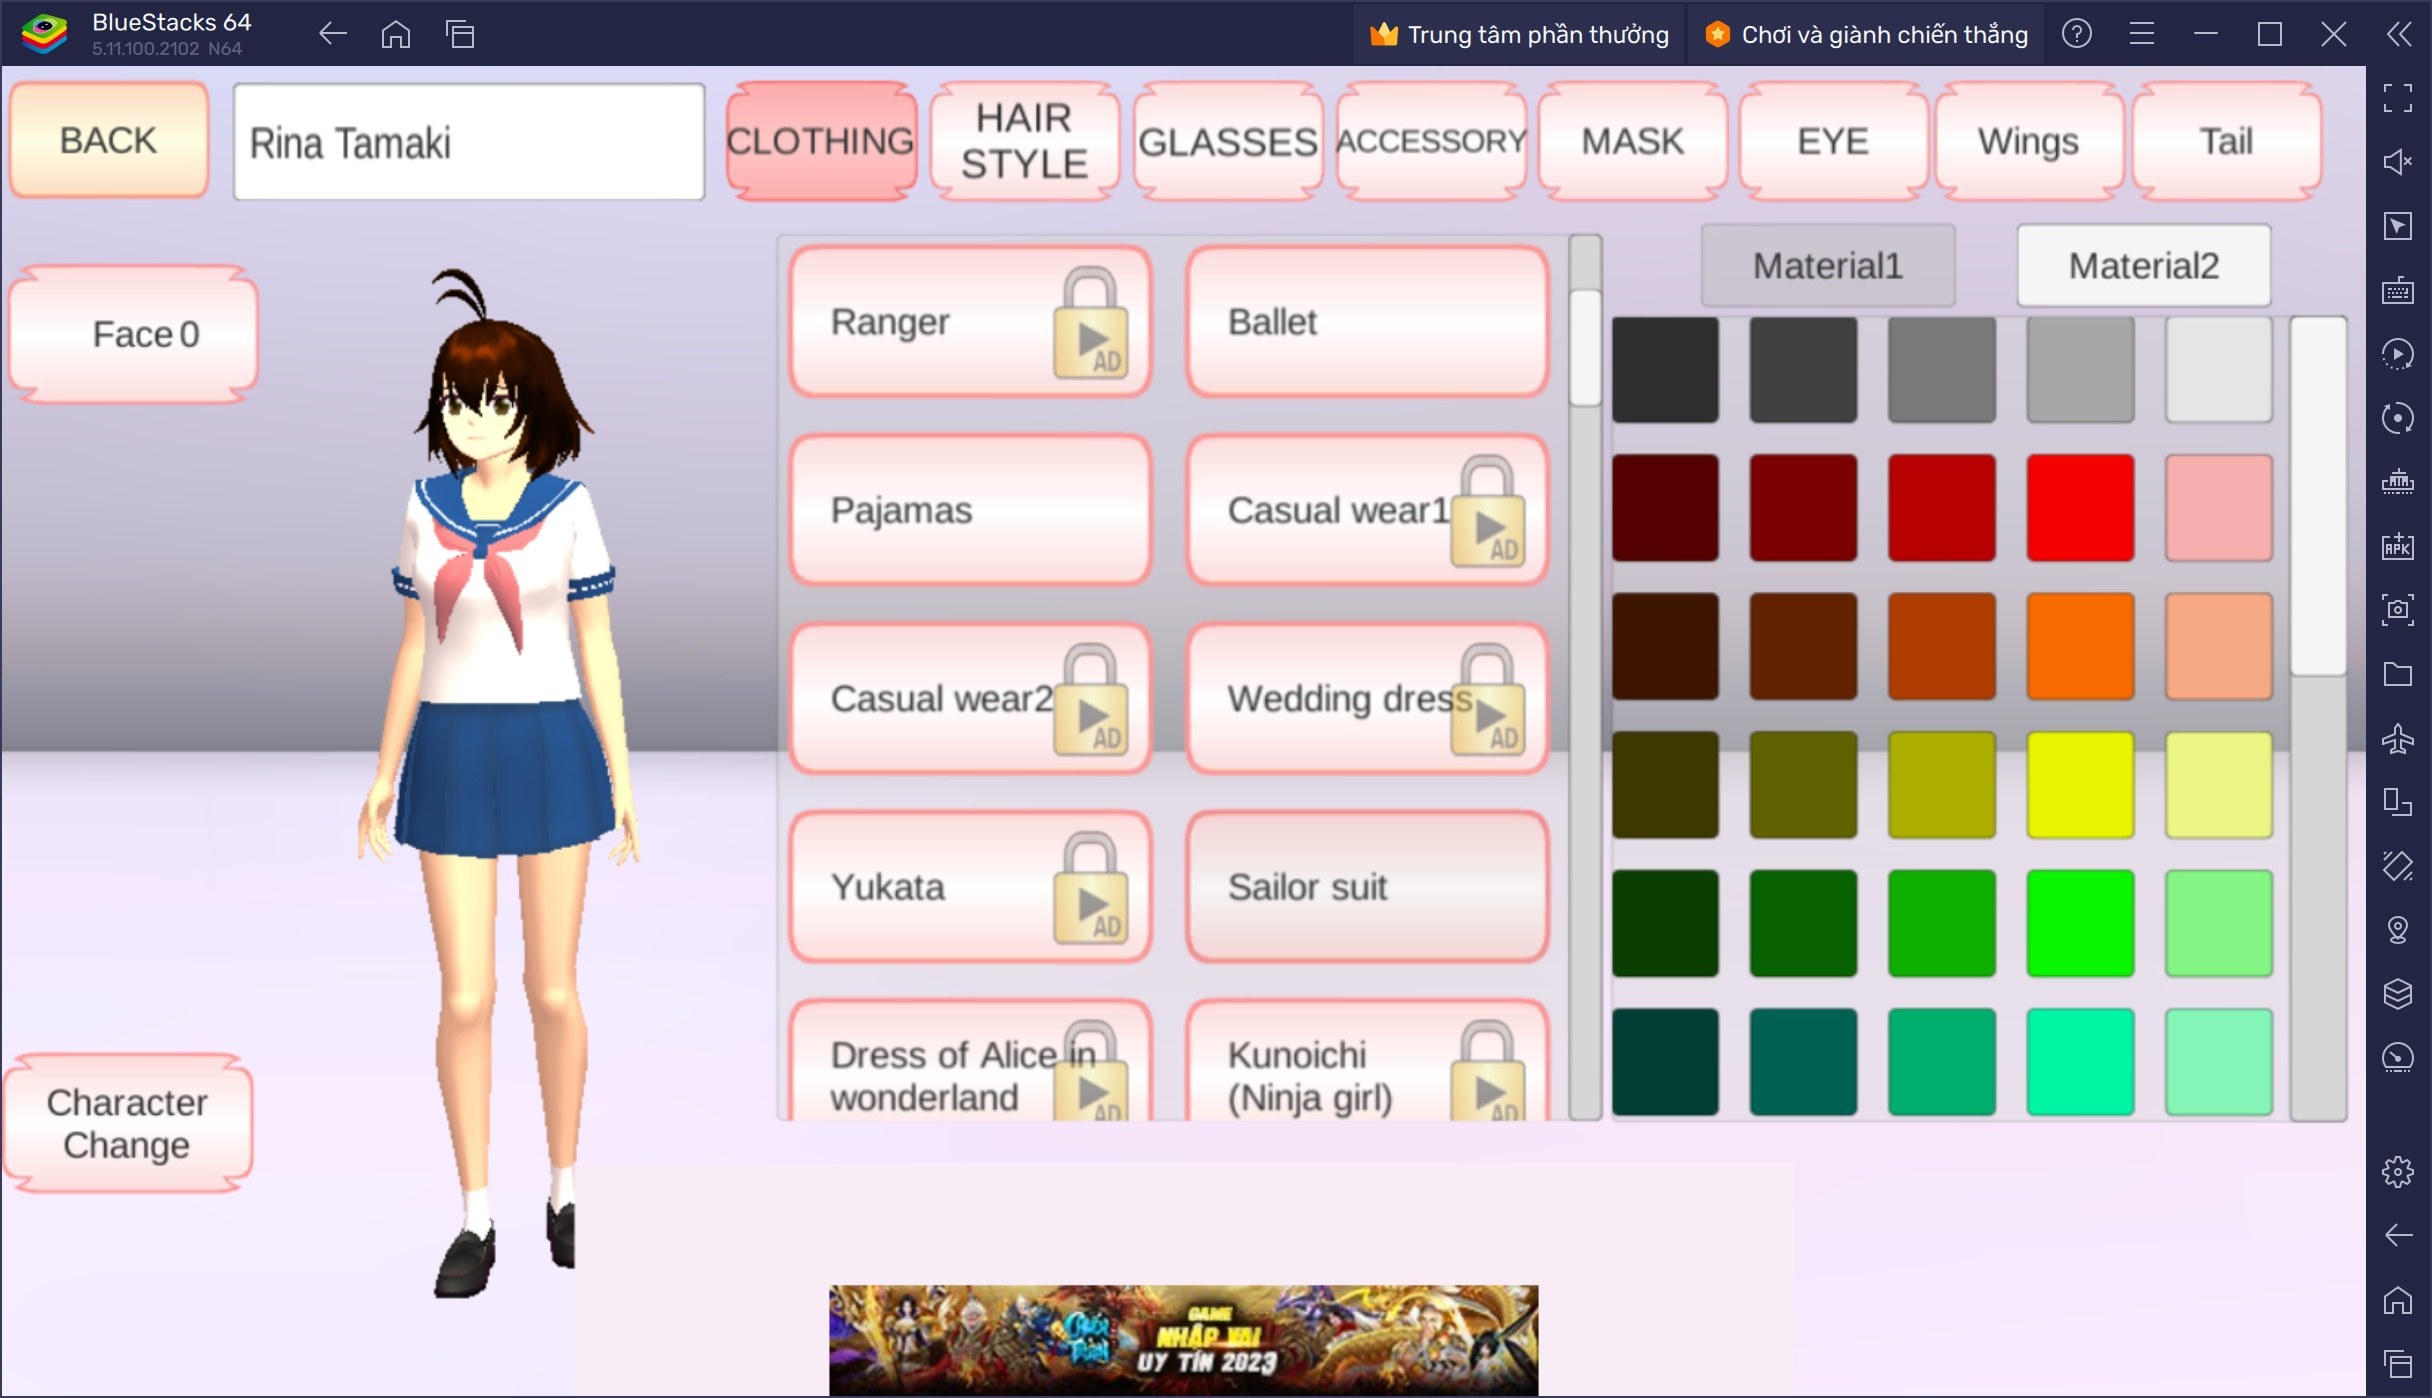 Sắm vai học sinh khi chơi SAKURA School Simulator trên PC